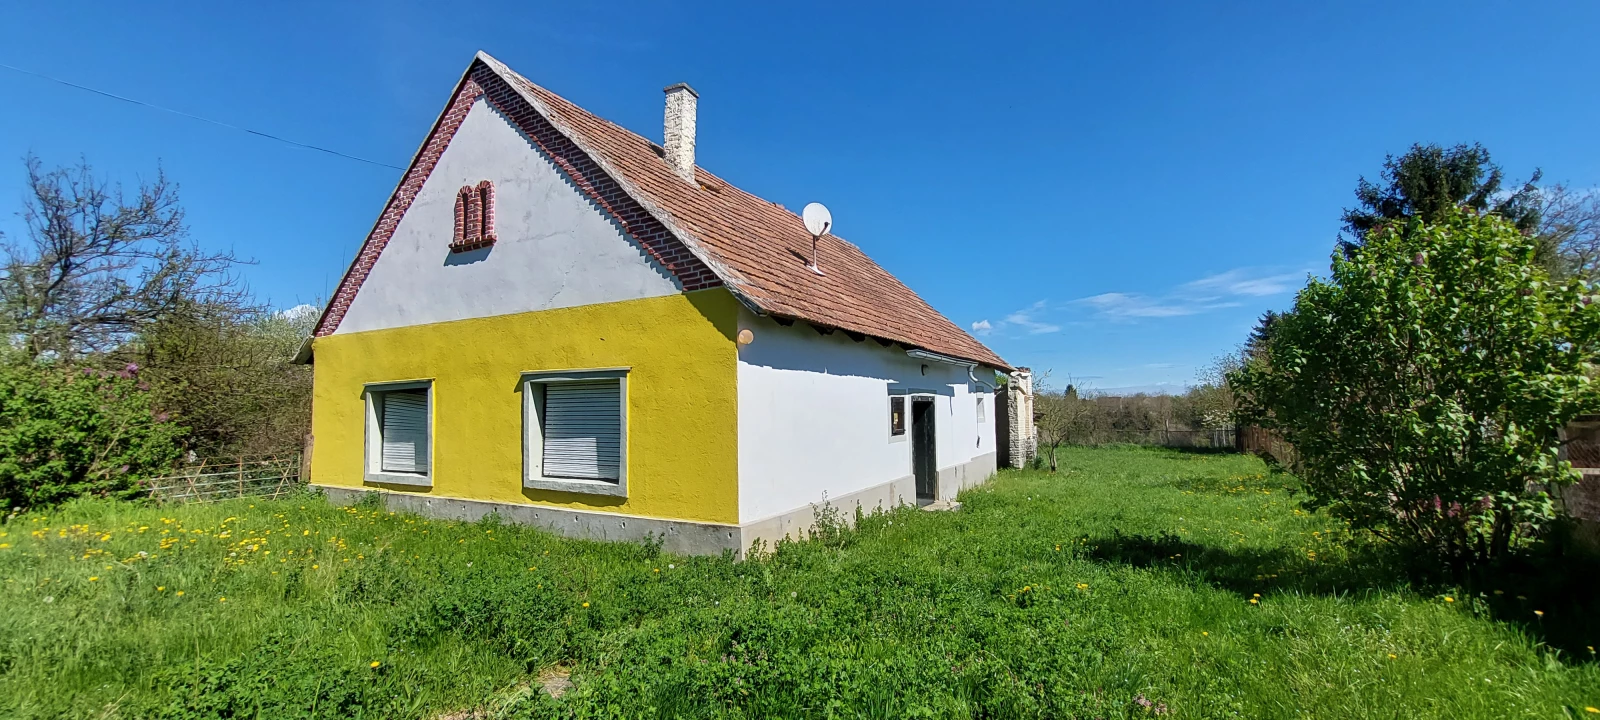 For sale house, Zalaszentmihály